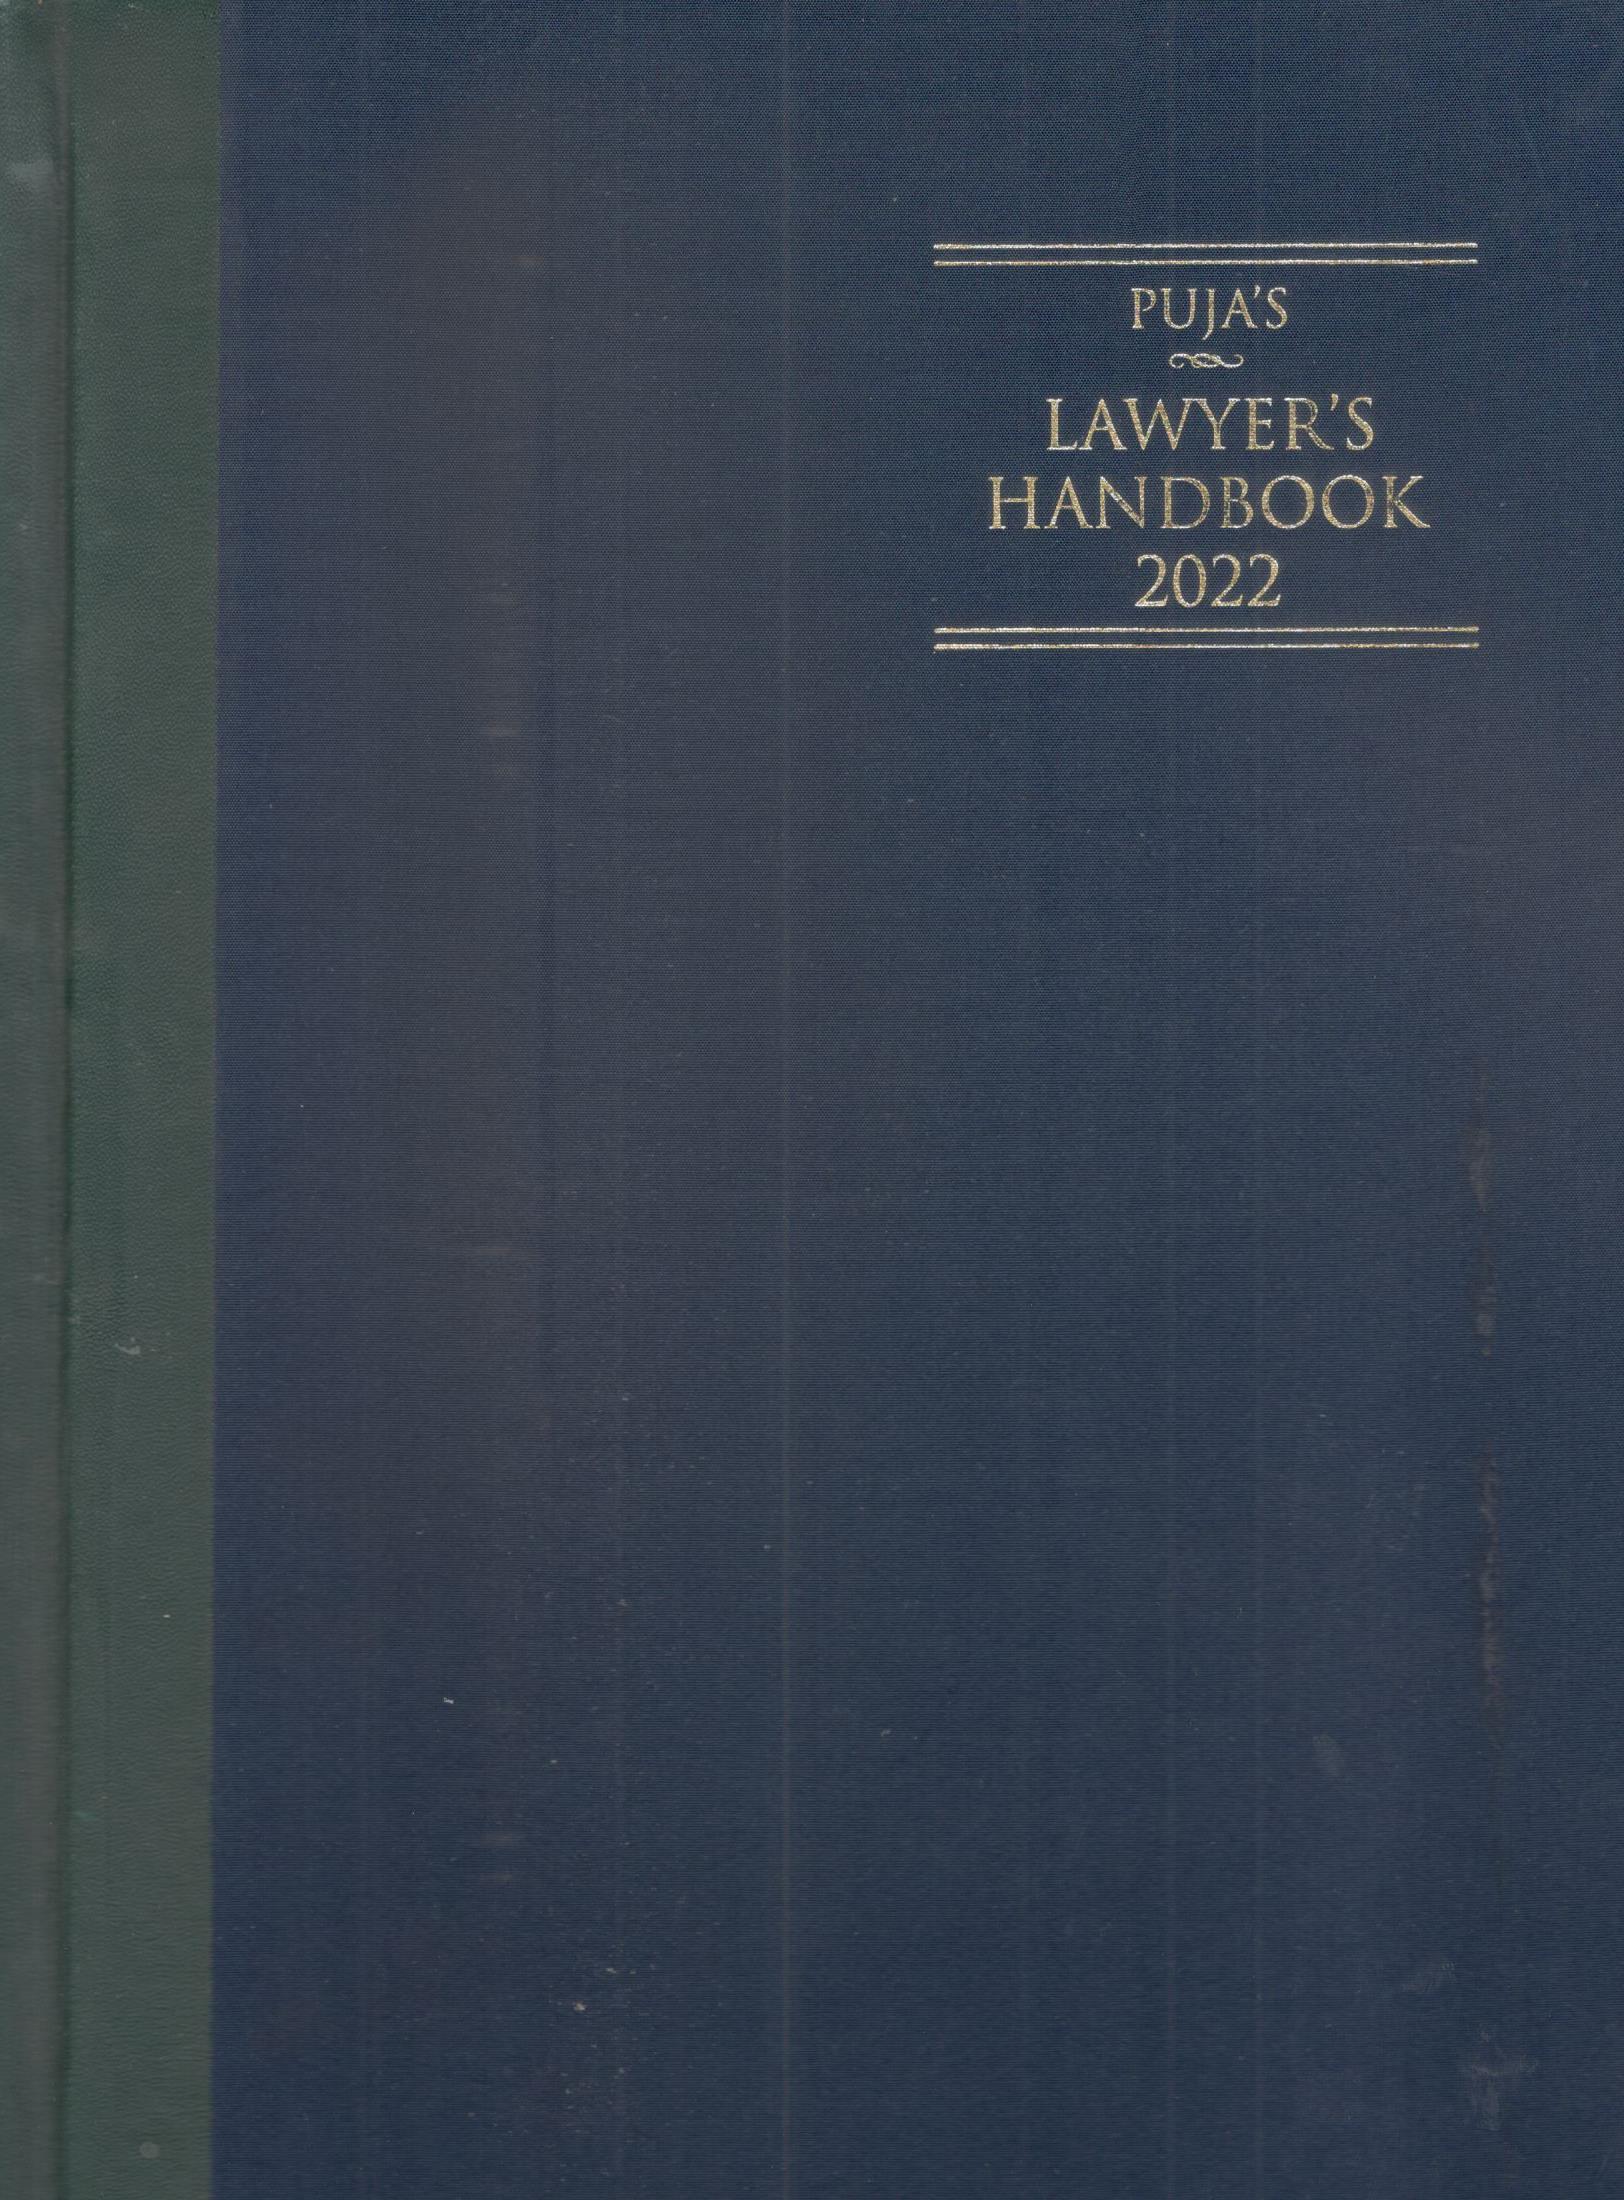  Buy Puja’s Lawyer’s Handbook 2022 - Register Blue